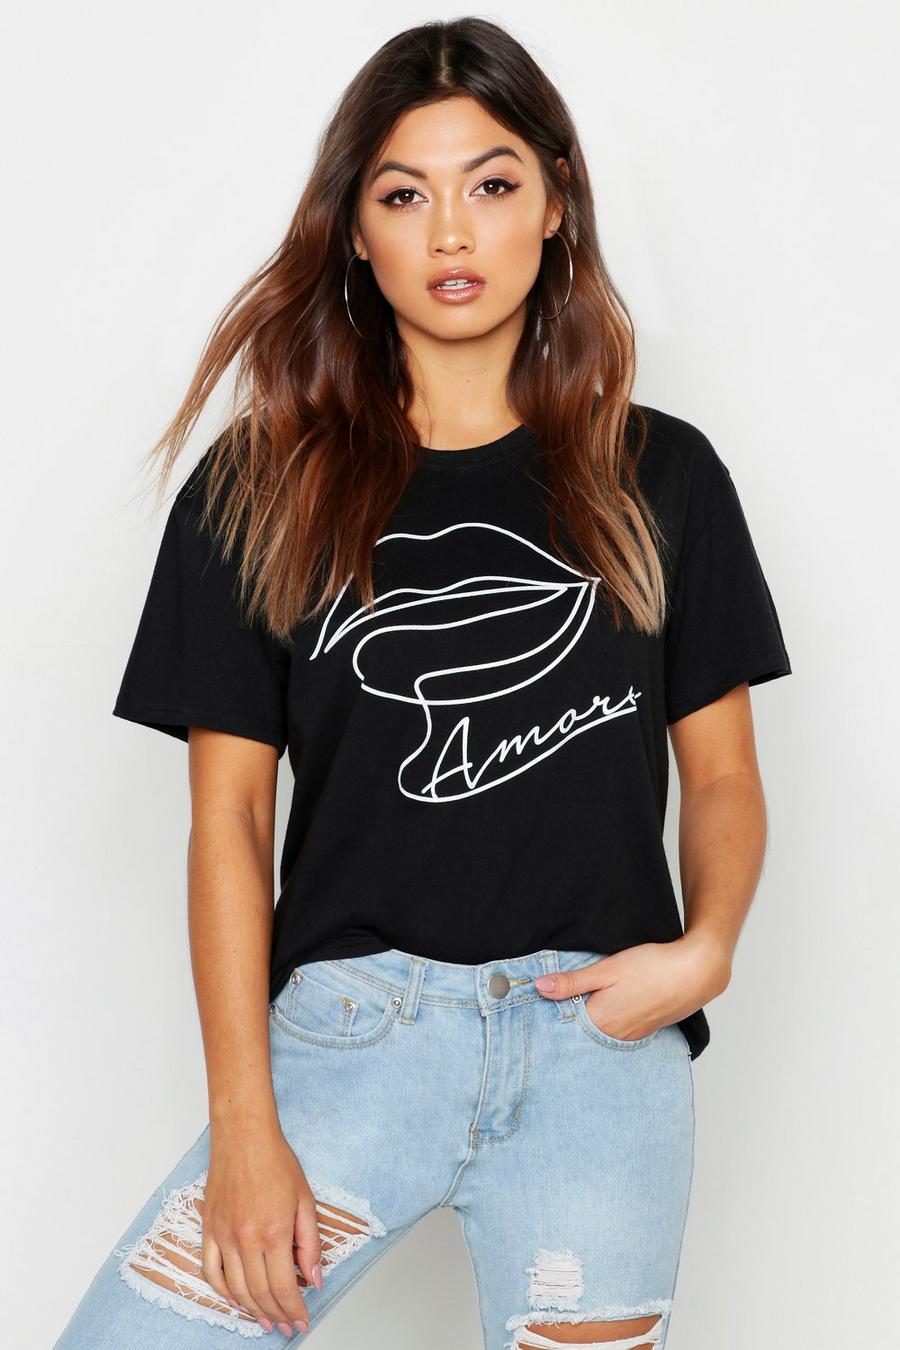 Camiseta con eslogan "Amore Lips" image number 1